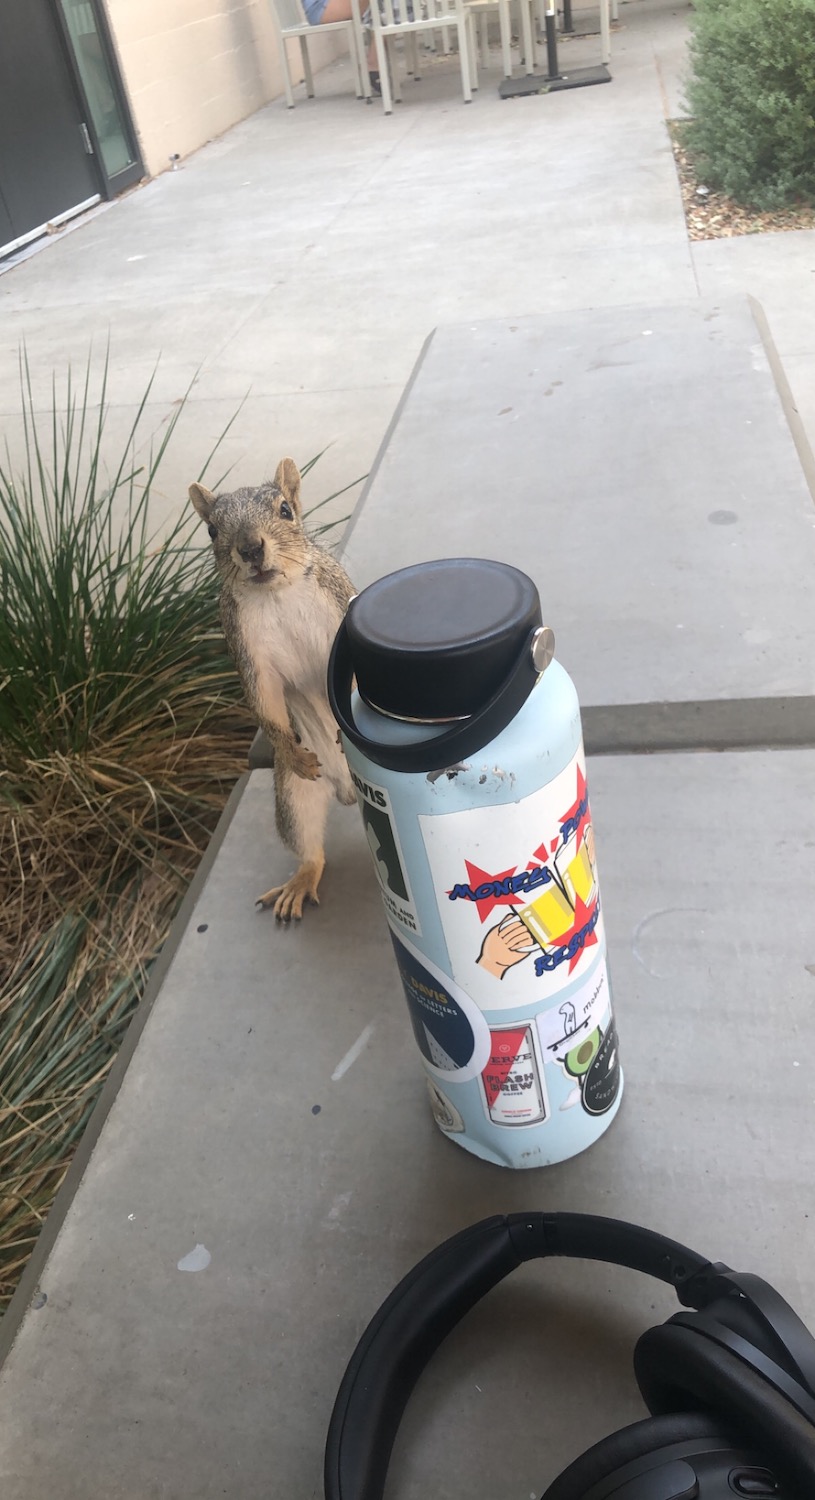 Squirrel standing near a water bottle